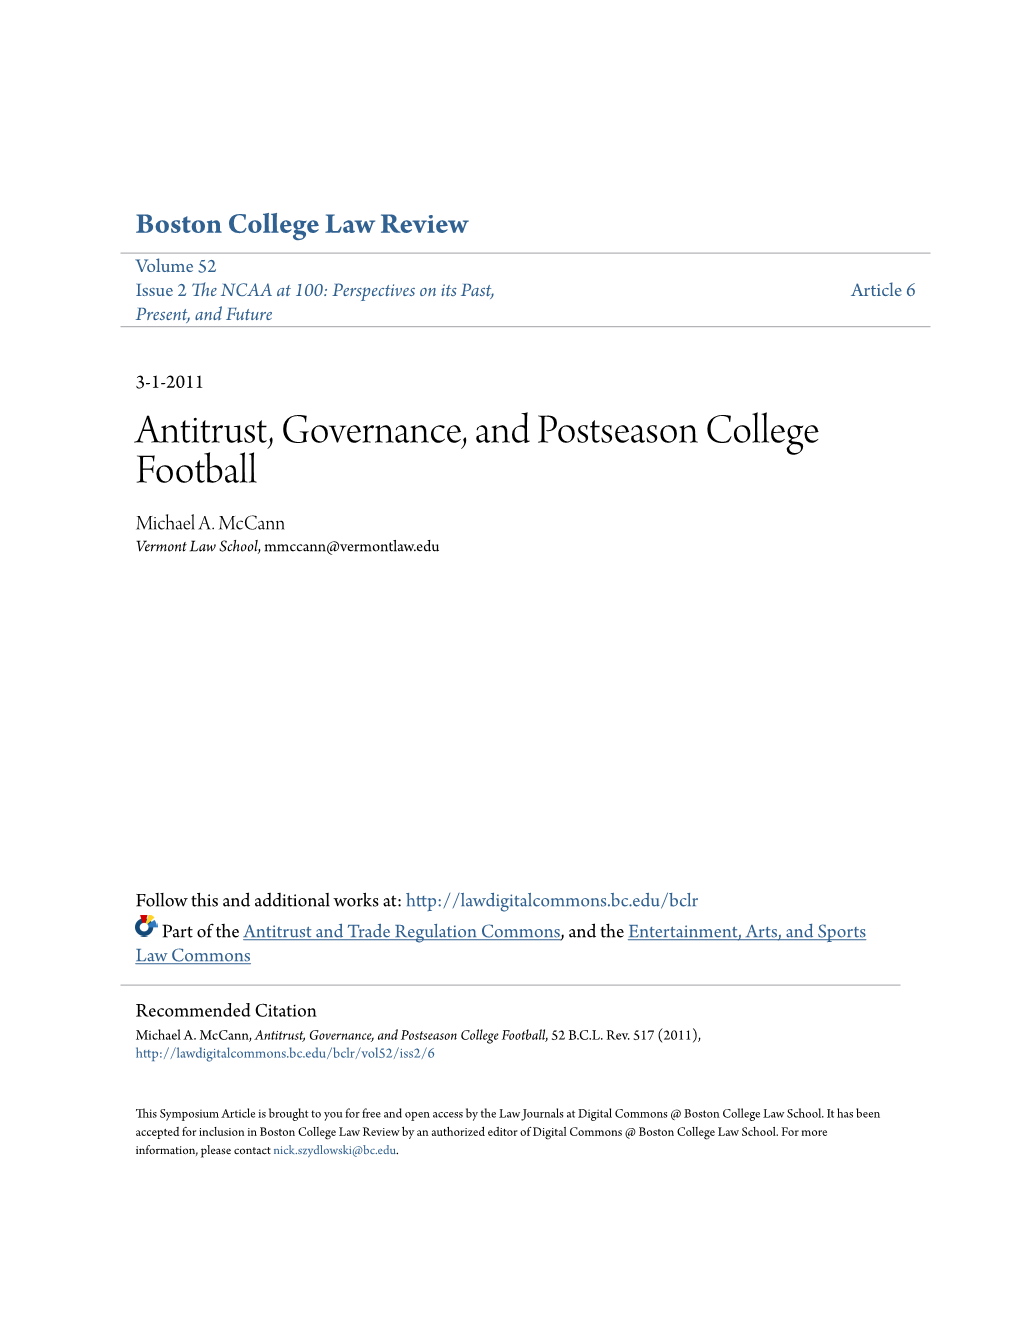 Antitrust, Governance, and Postseason College Football Michael A